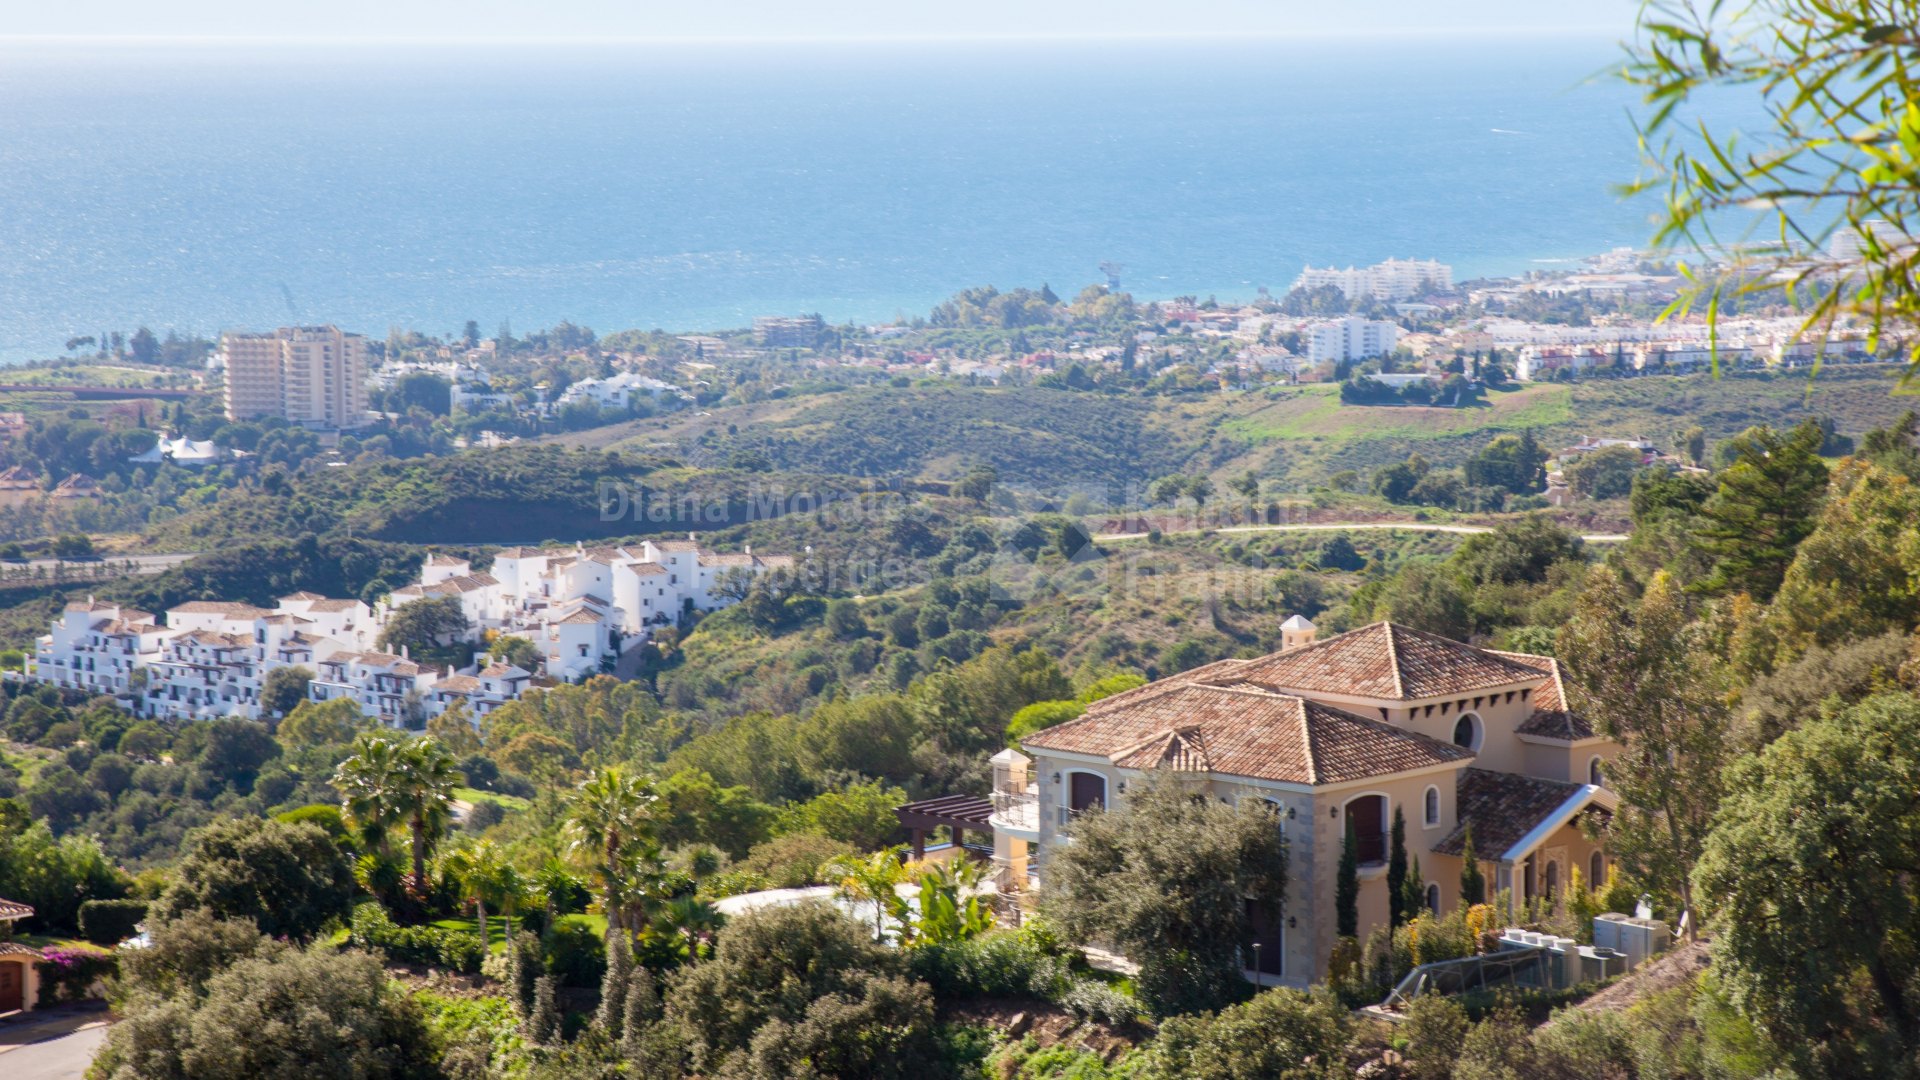 Los Altos de los Monteros, Villa classique avec vues panoramiques